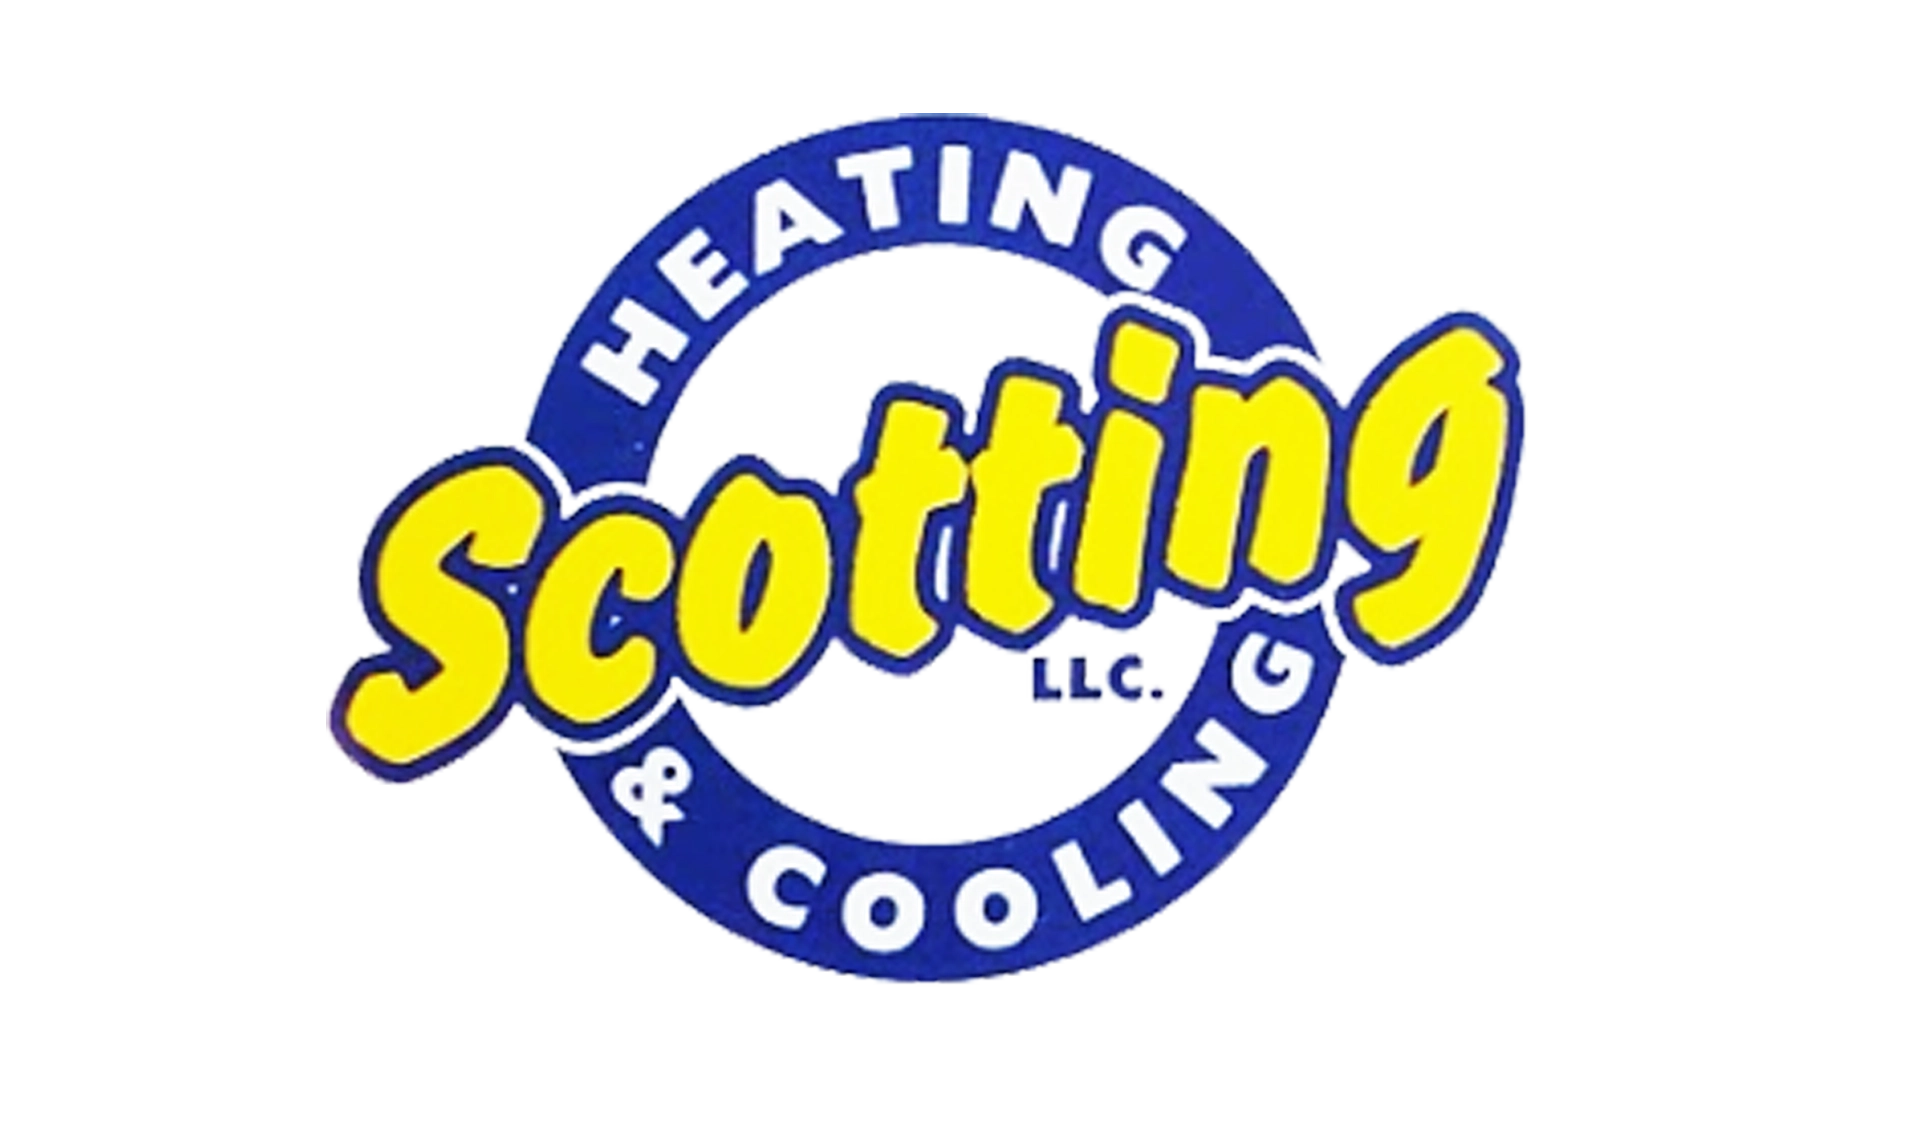 Scotting Heating & Cooling Logo